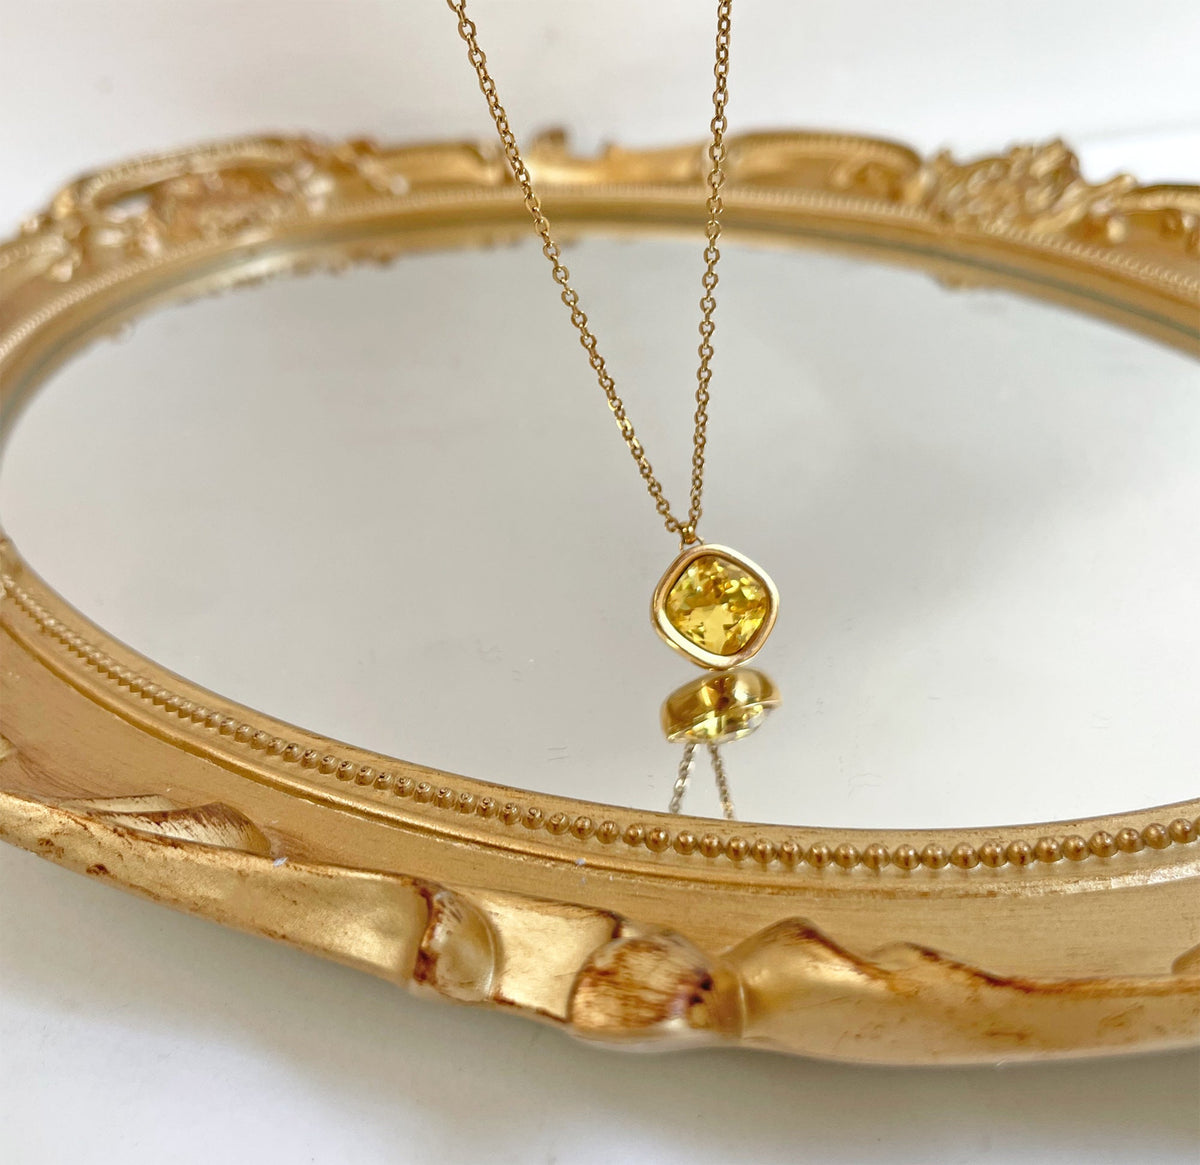 gold citrine pendant necklace waterproof jewelry